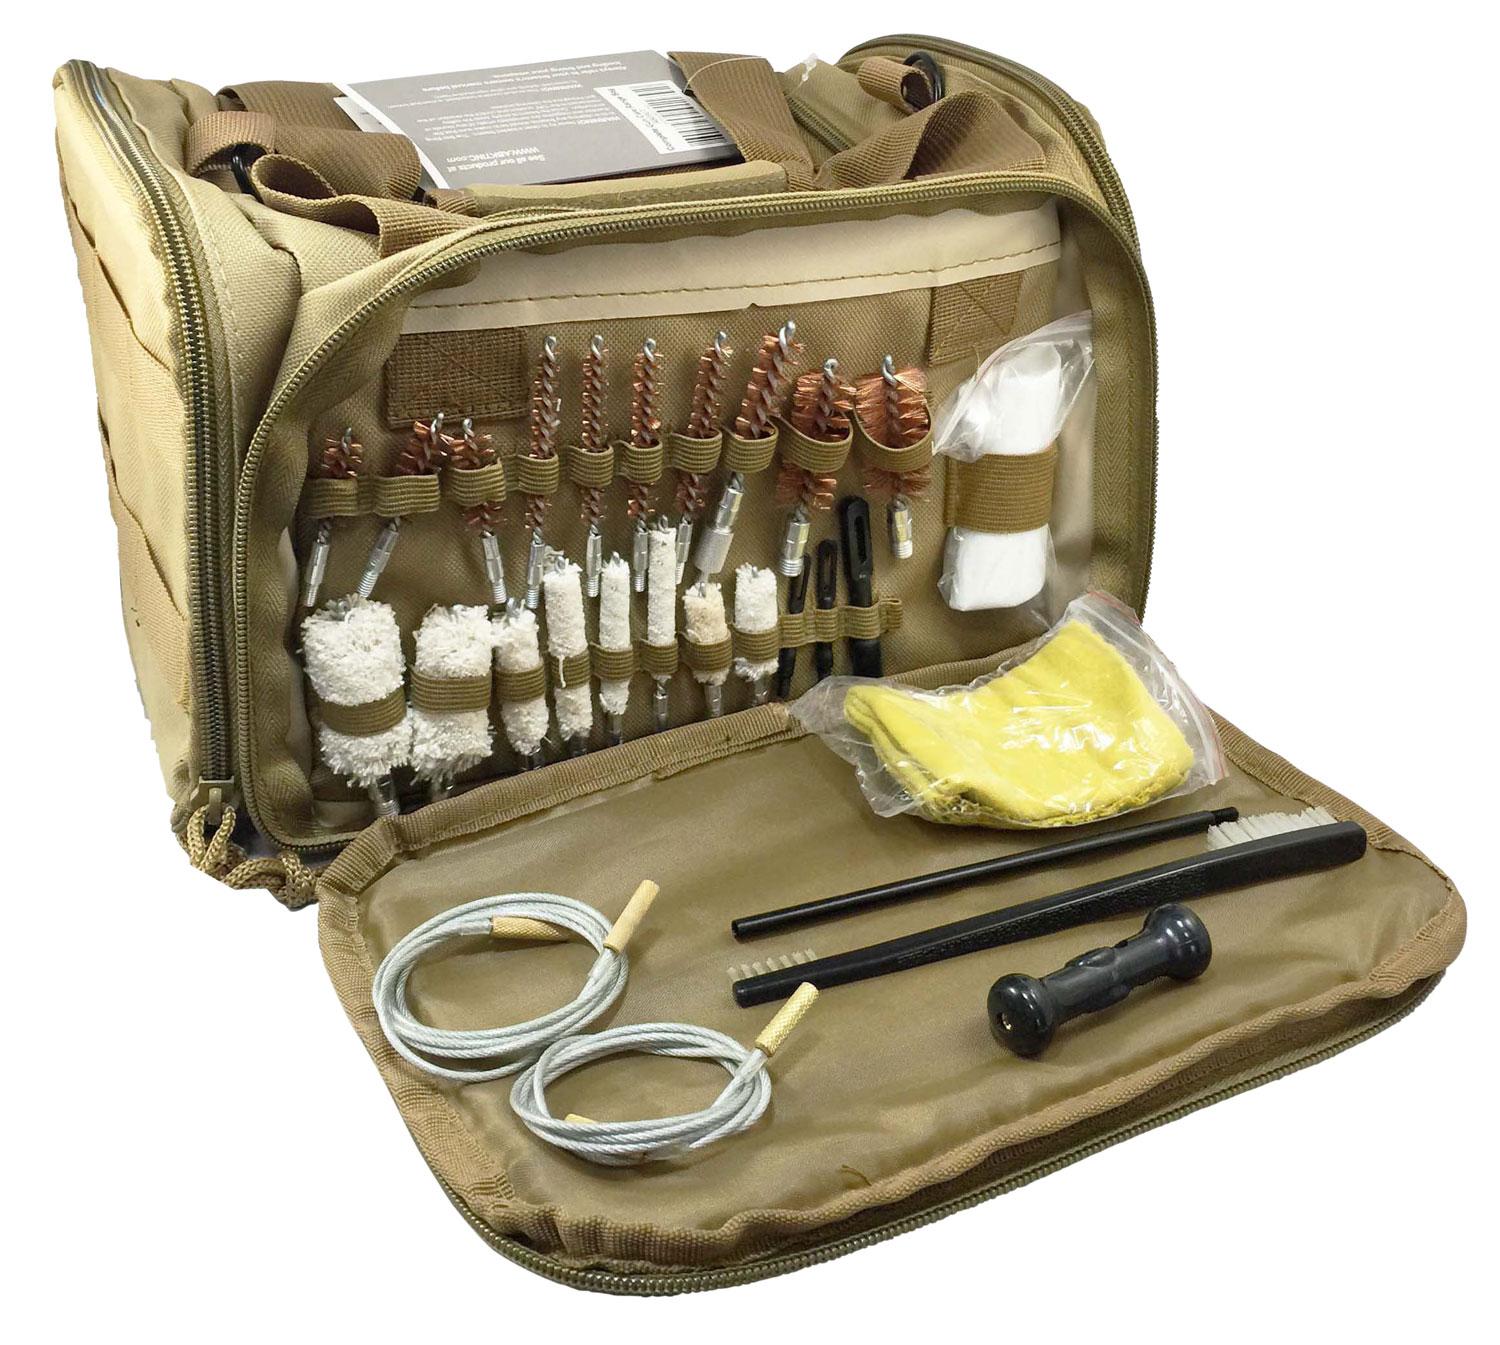  Abkt Ab090t Uni Gun Care Range Bag Tn